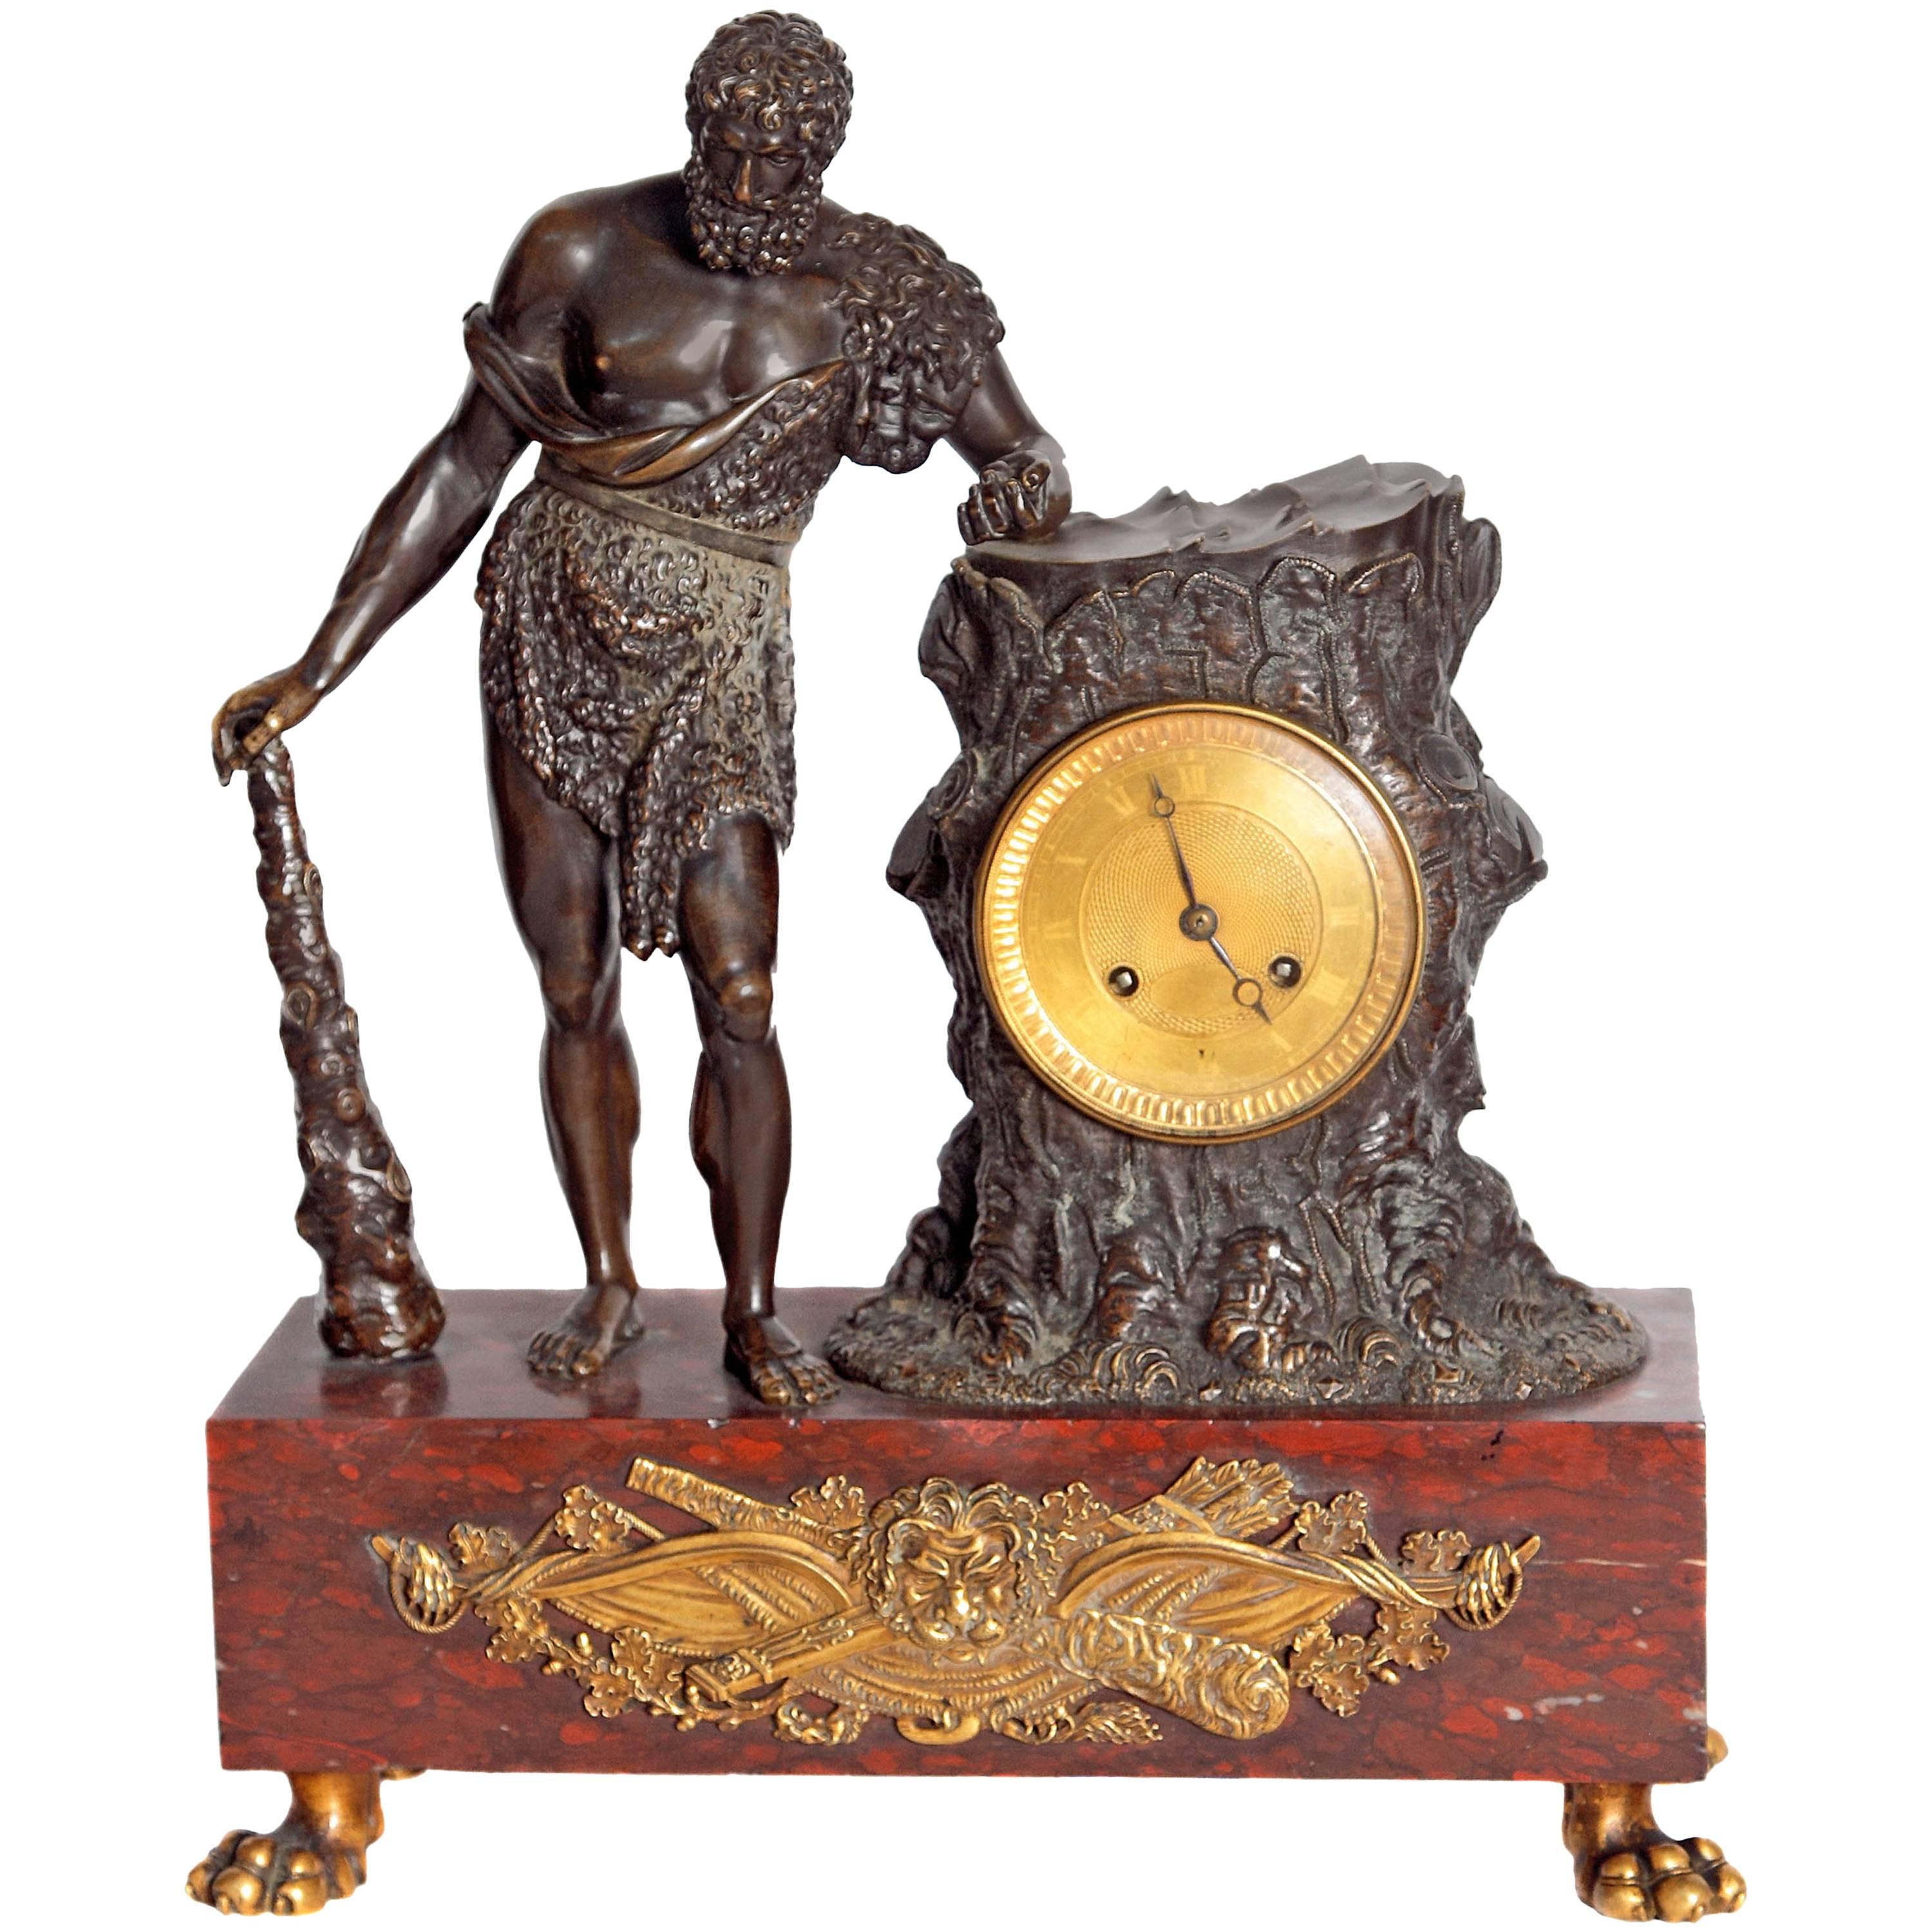 French Empire Figural Mantel Clock "Hercule Farnèse" Attributed to Claude Galle